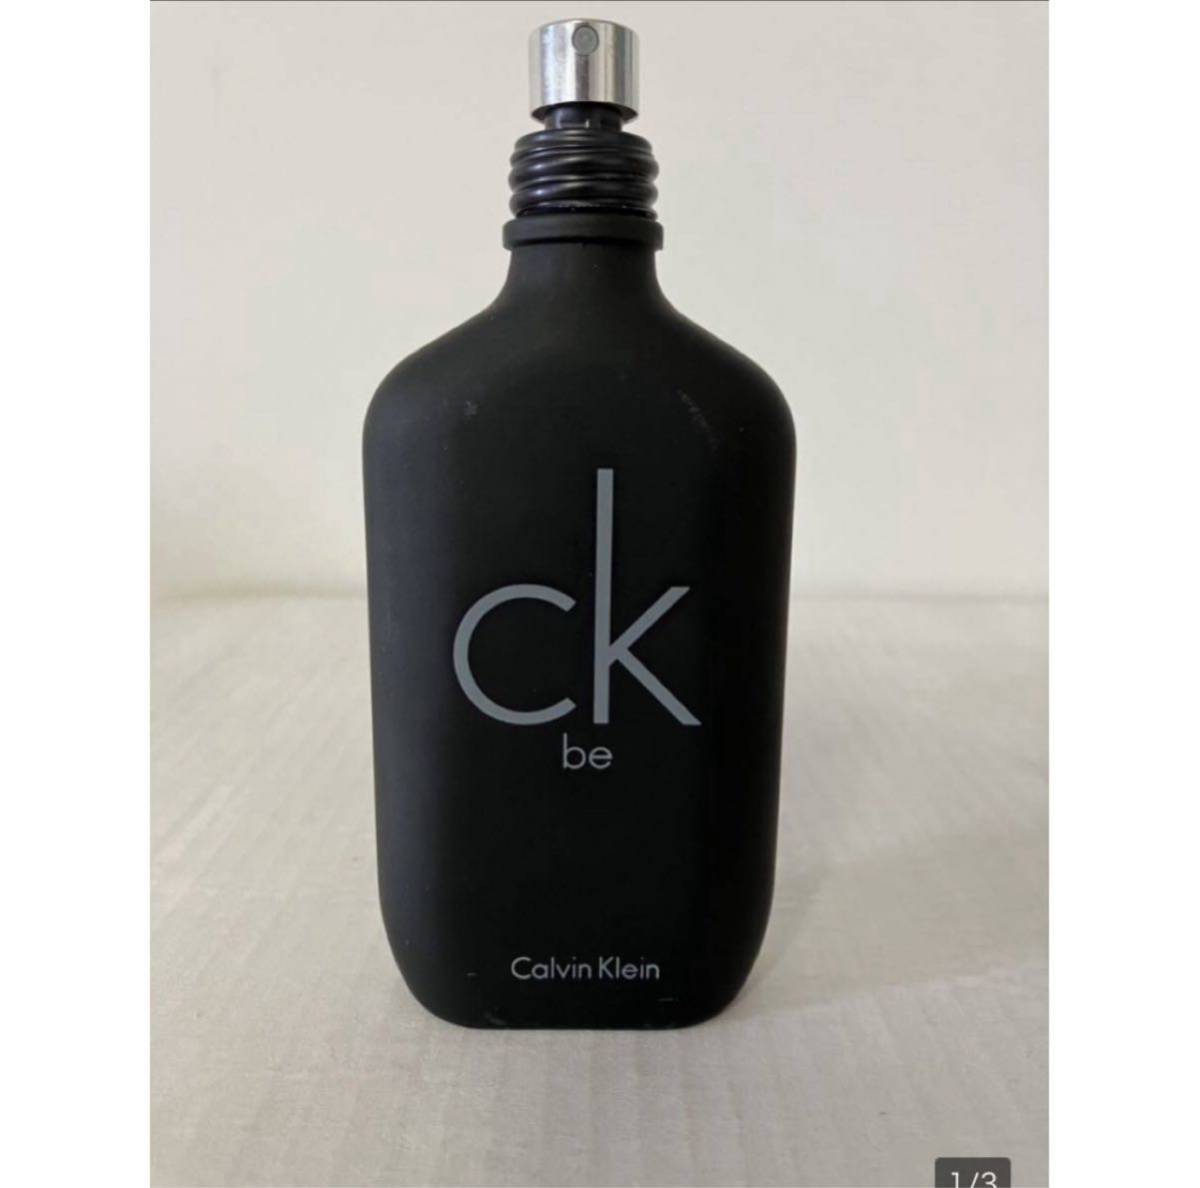 Calvin Klein CK be 100ml 香水 カルバンクラインシーケー_画像1